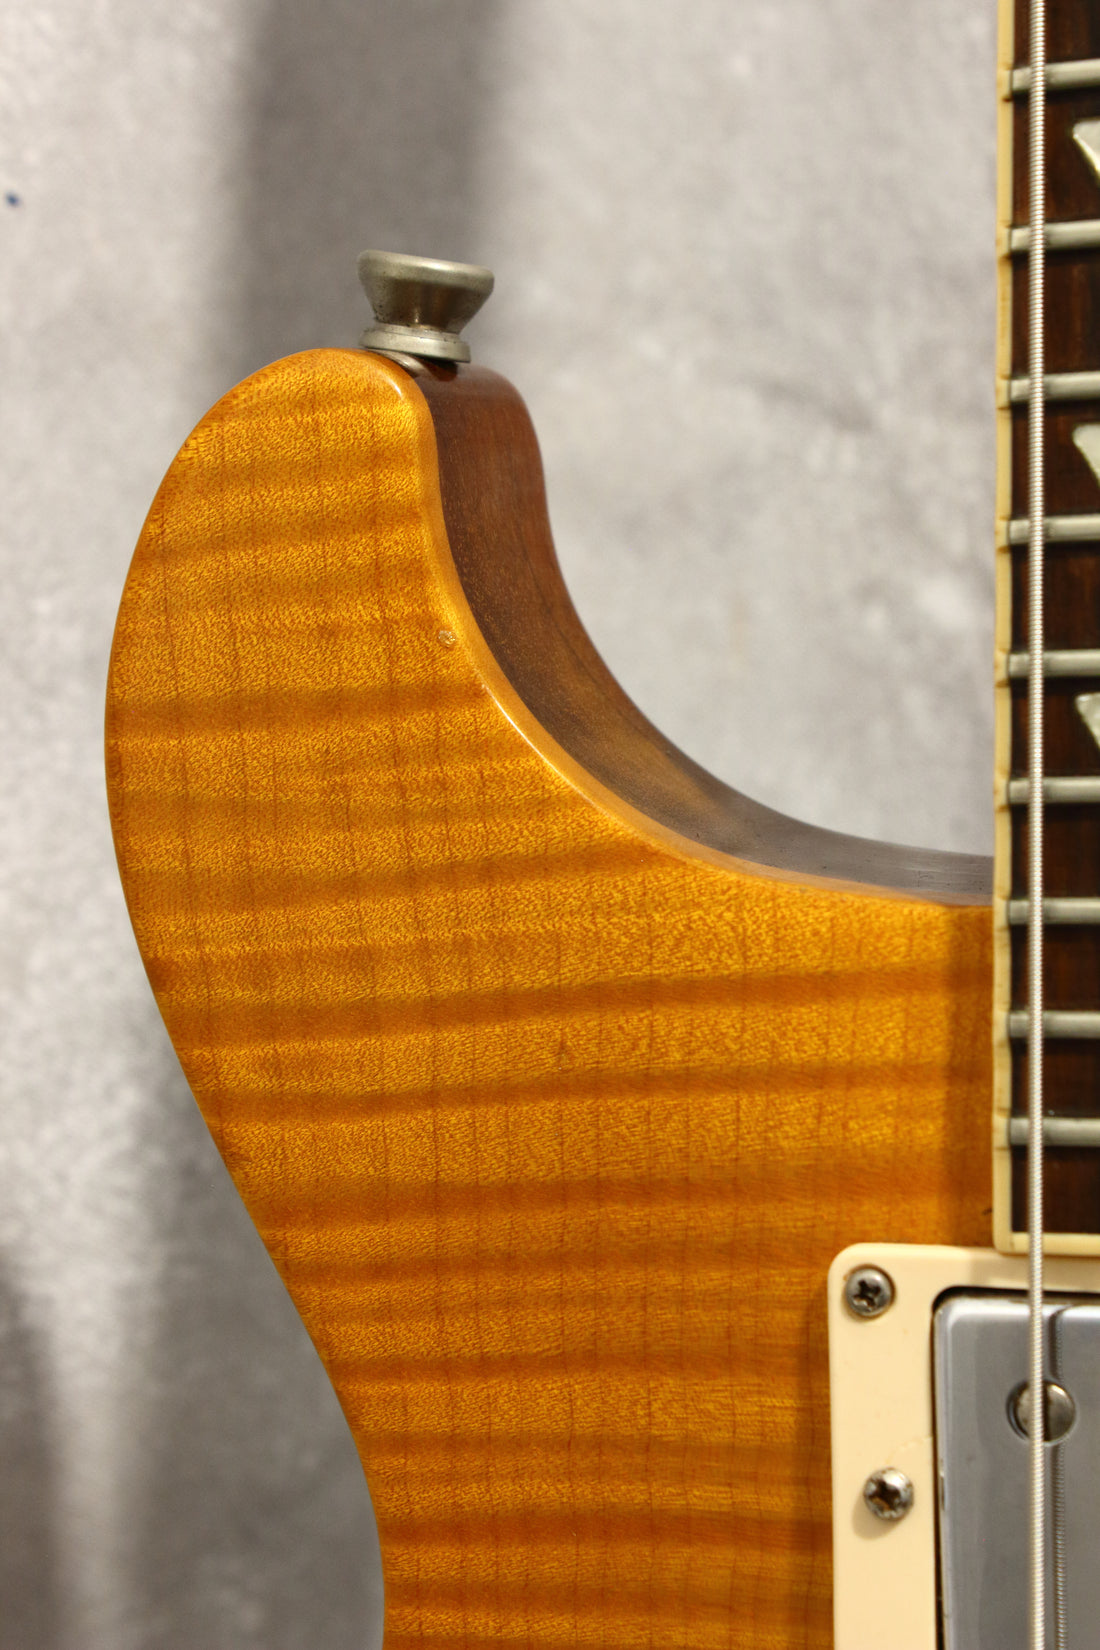 Gibson Les Paul Standard Double Cut Honeyburst 1998